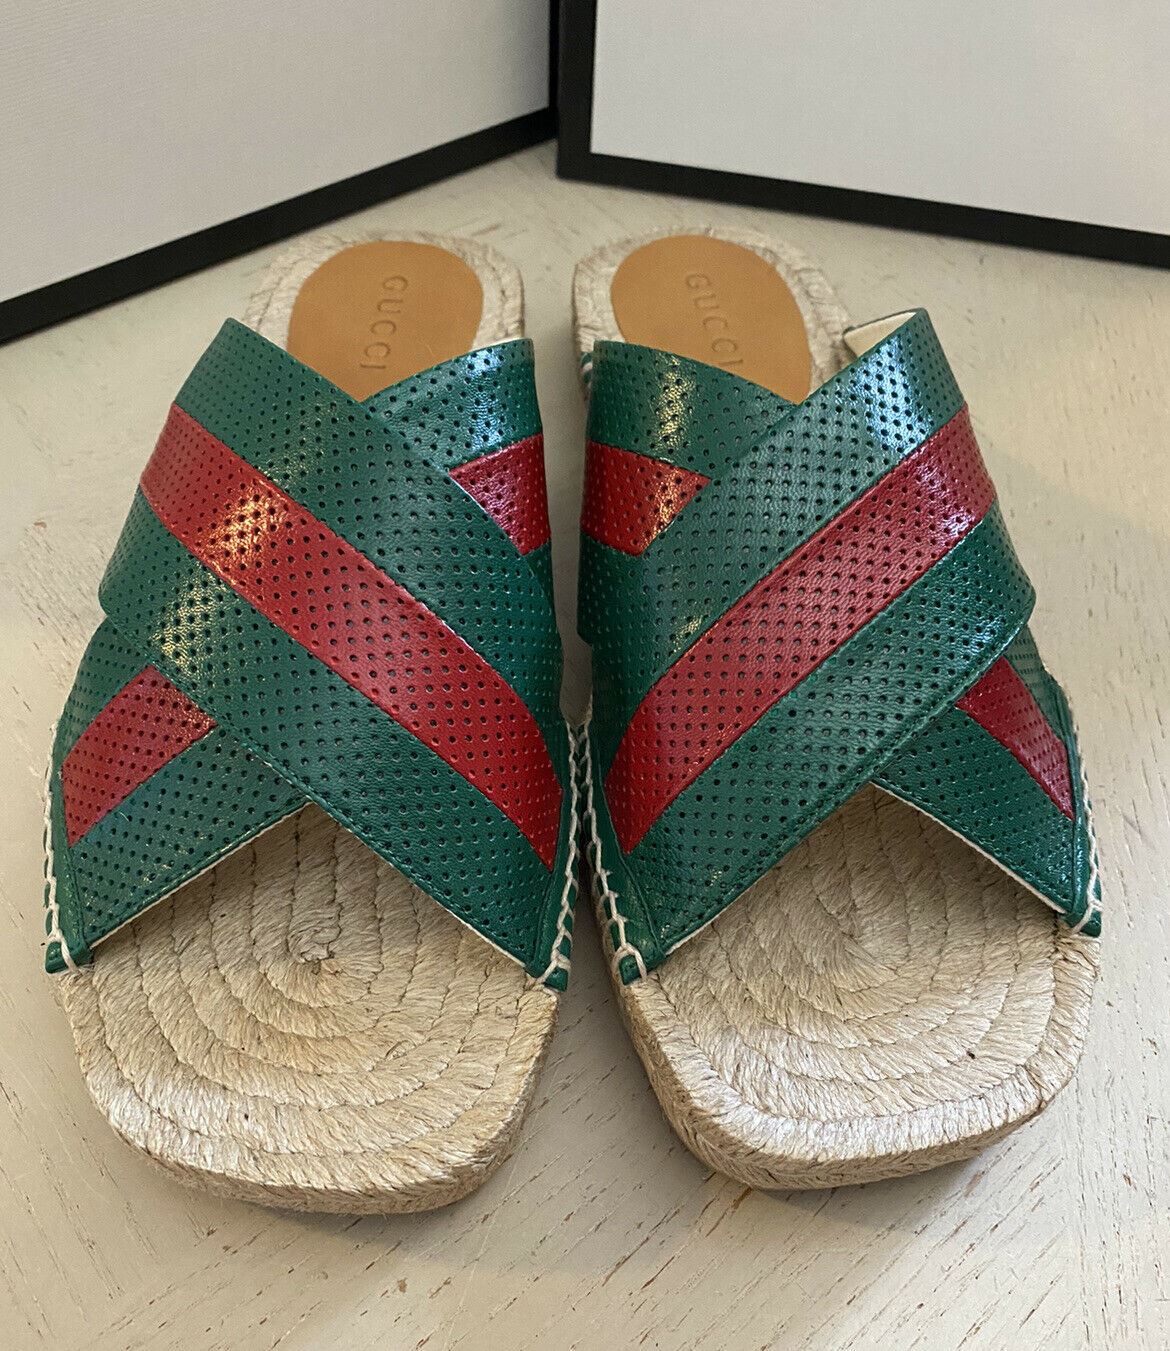 NIB Gucci Herren Sandale Espadrille Schuhe Grün/Rot 9 US/8 UK